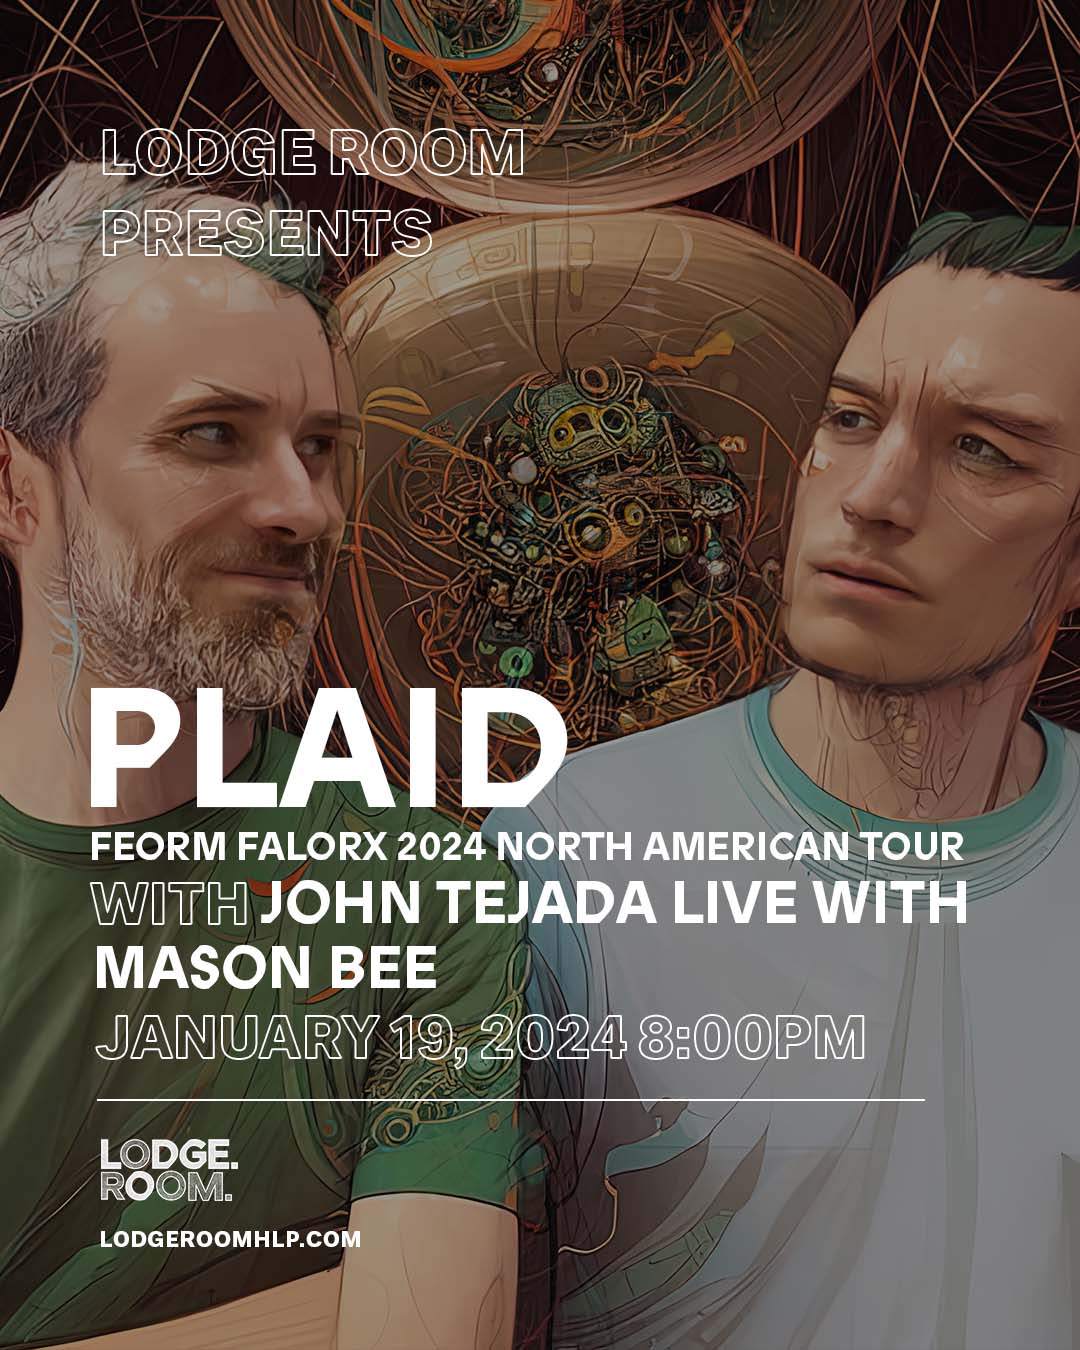 Lodge Room presents: Plaid and John Tejada with Mason Bee - Página frontal